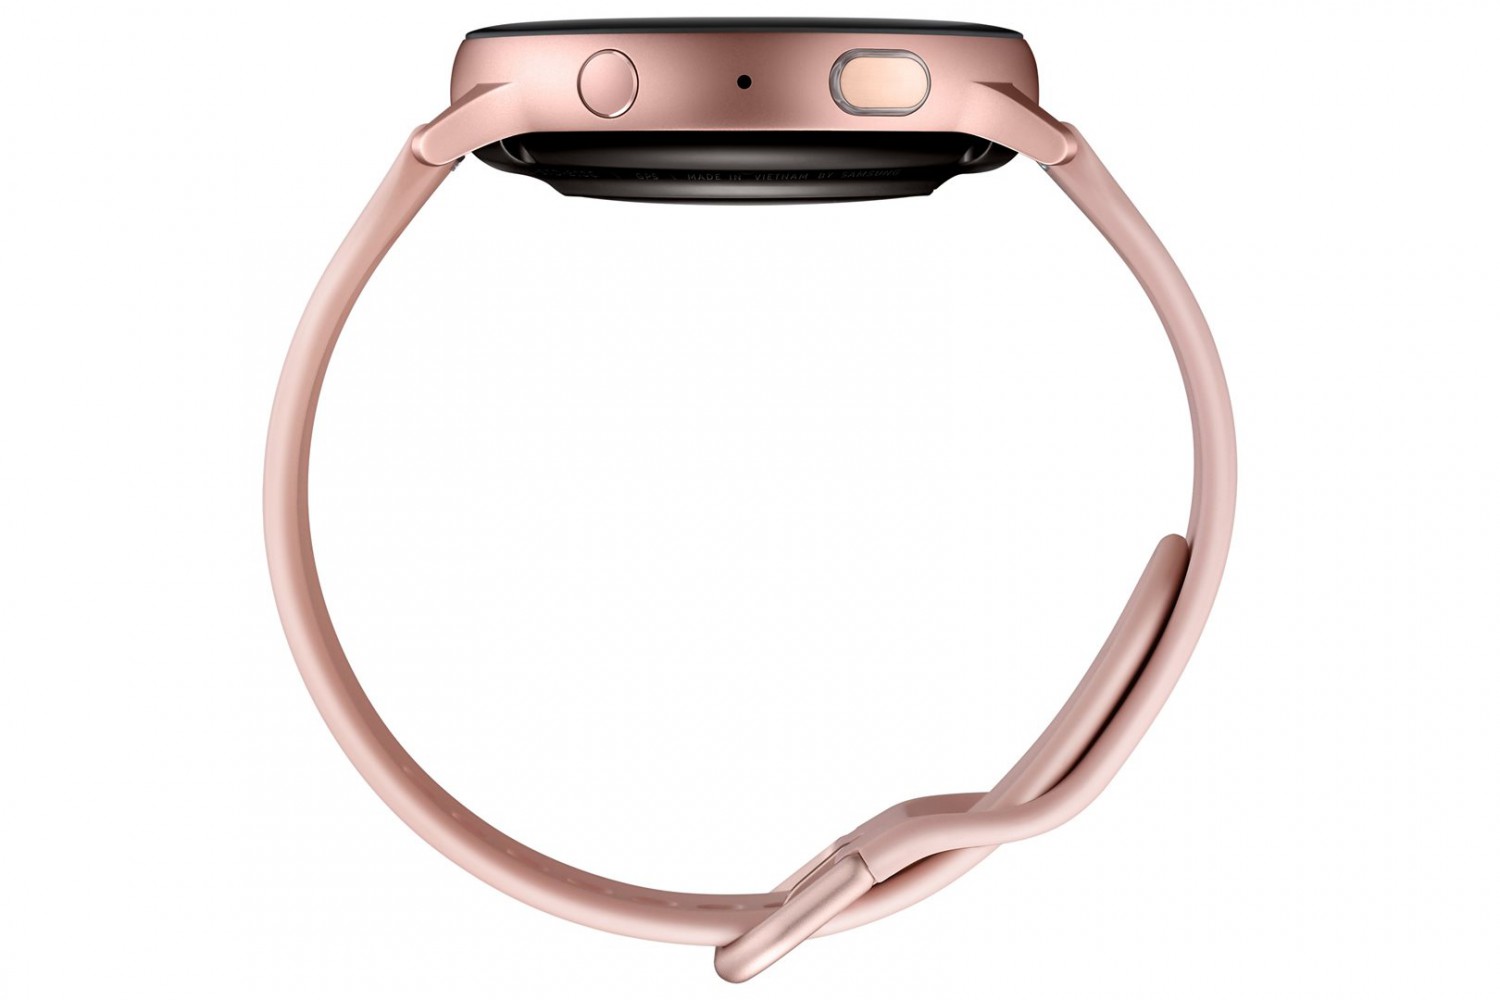 SAMSUNG Galaxy Watch Active 2  R830 Aluminium 40mm zlatá/růžová